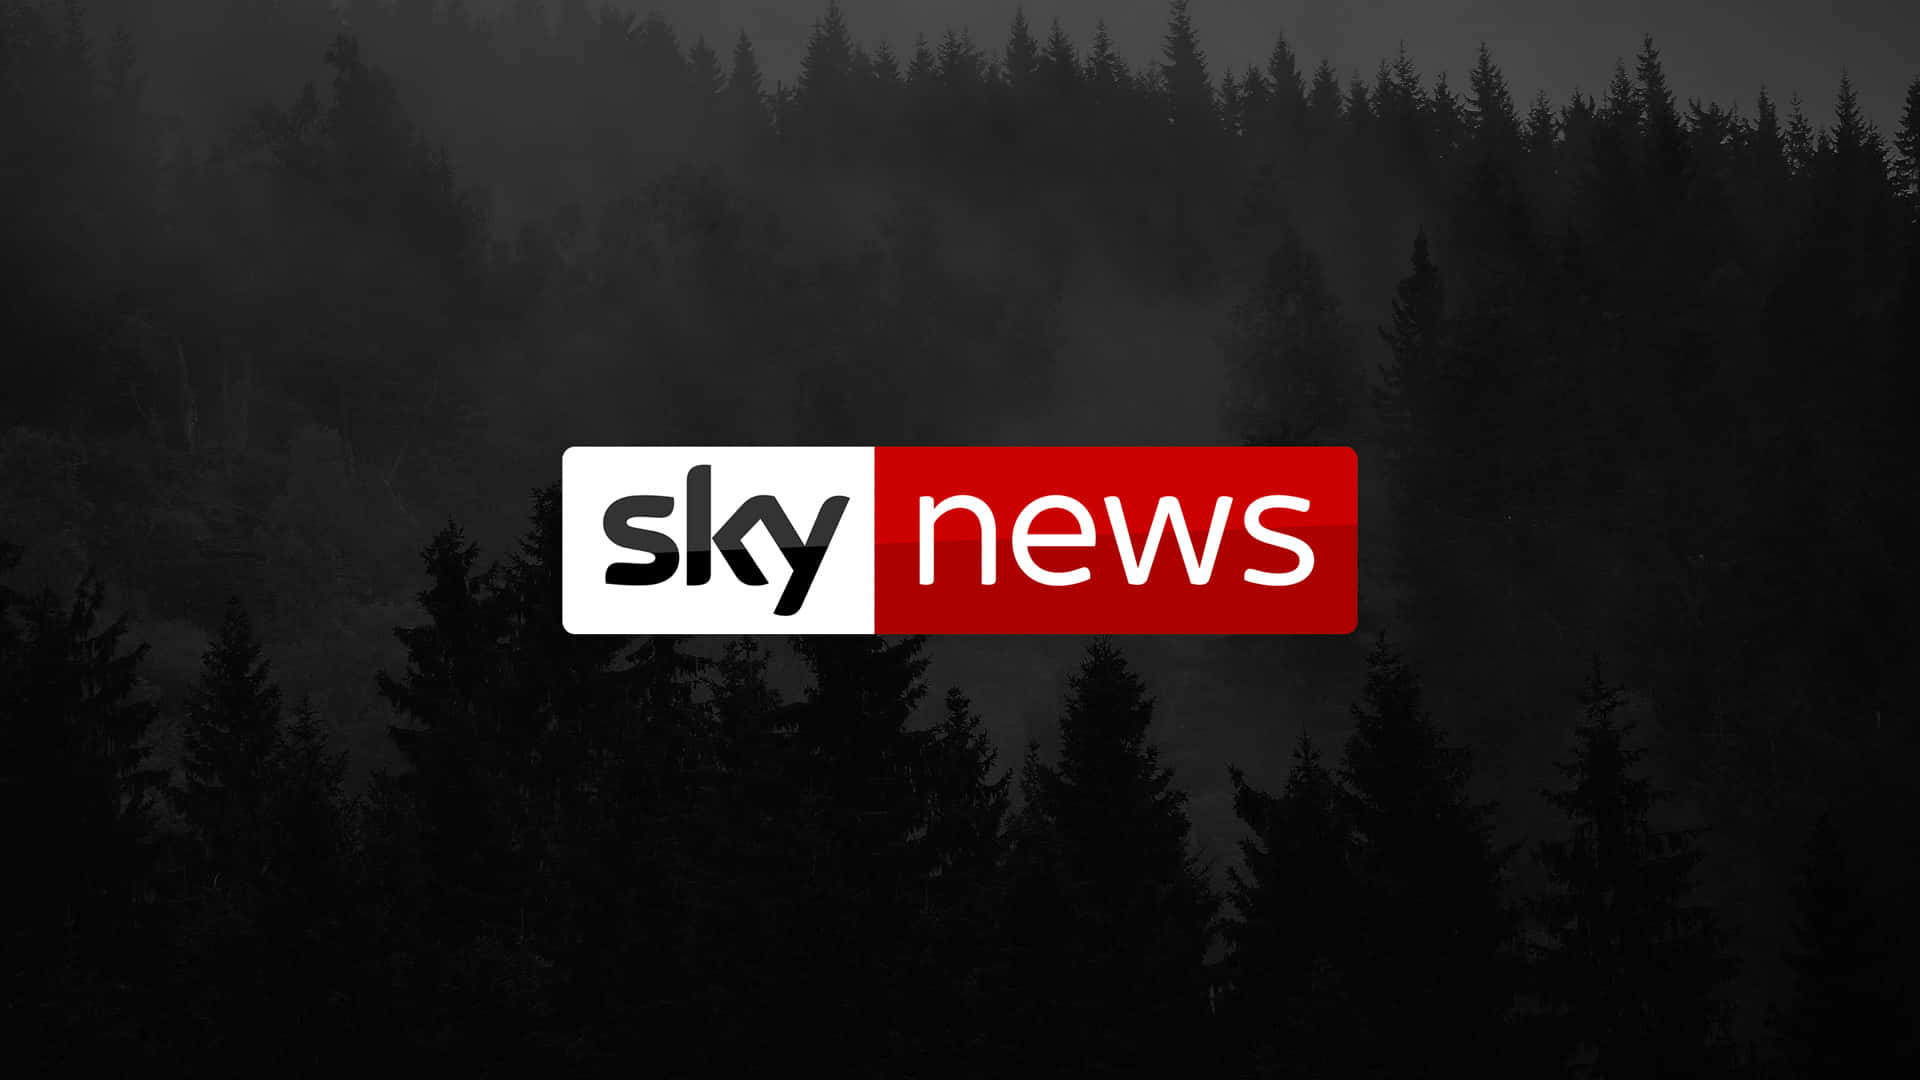 Sky News Dark Forest Wallpaper